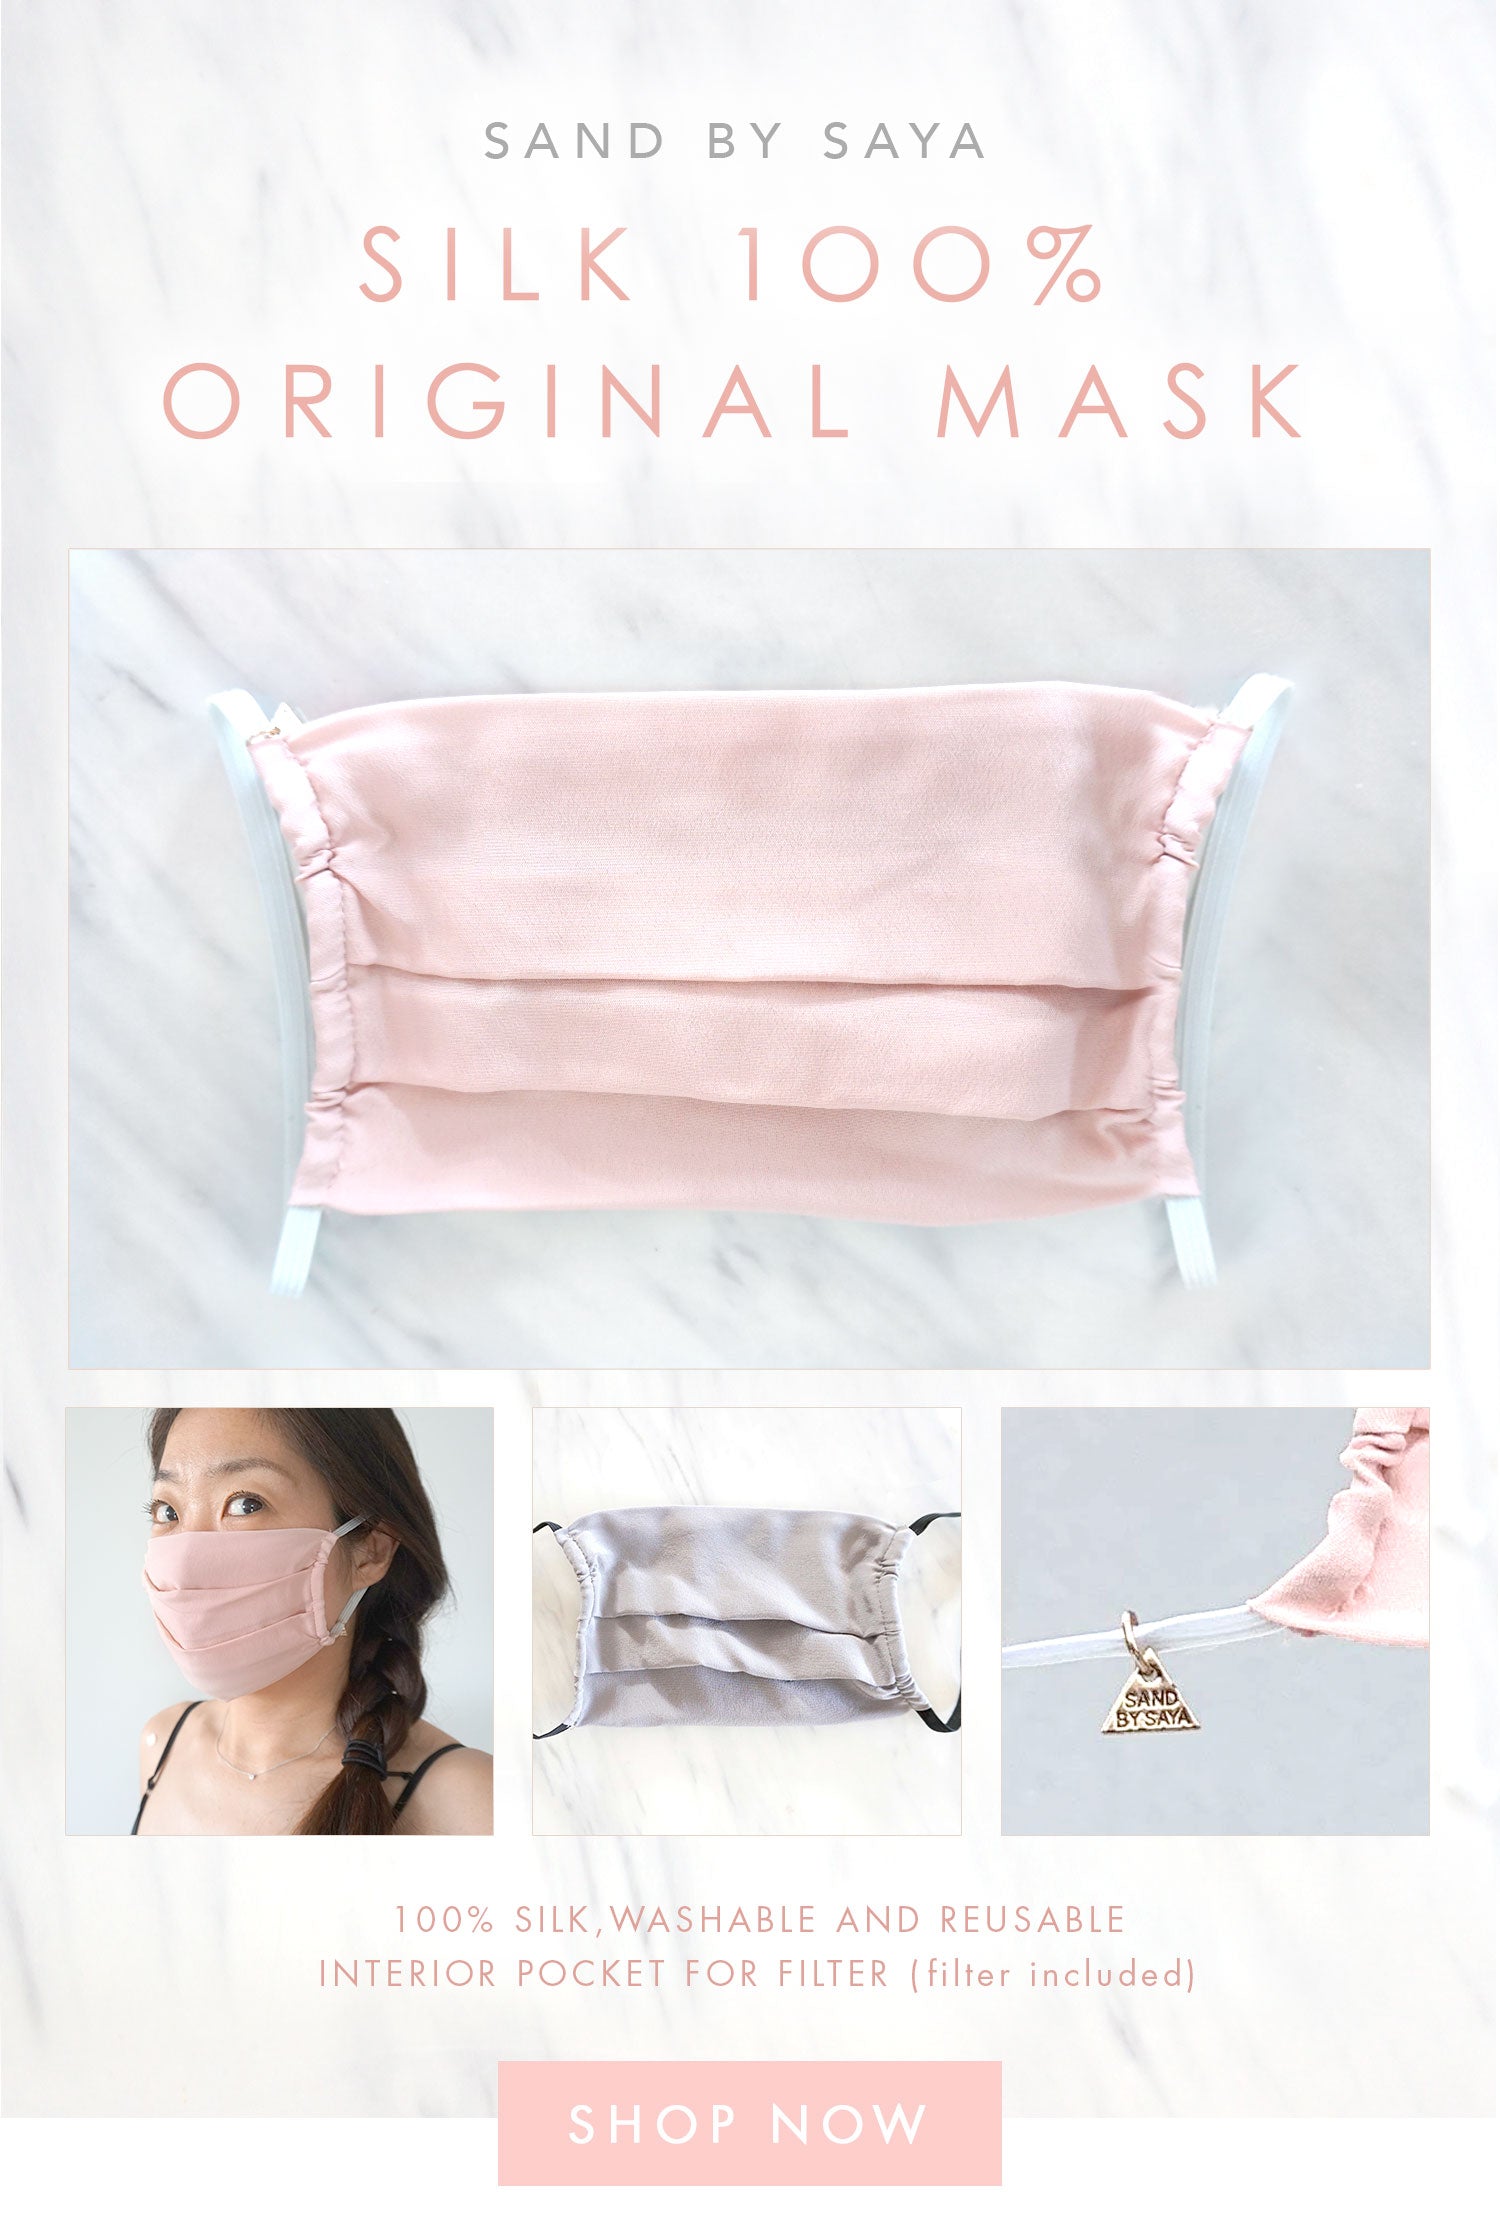 Silk 100 % facial mask for sensitive skin